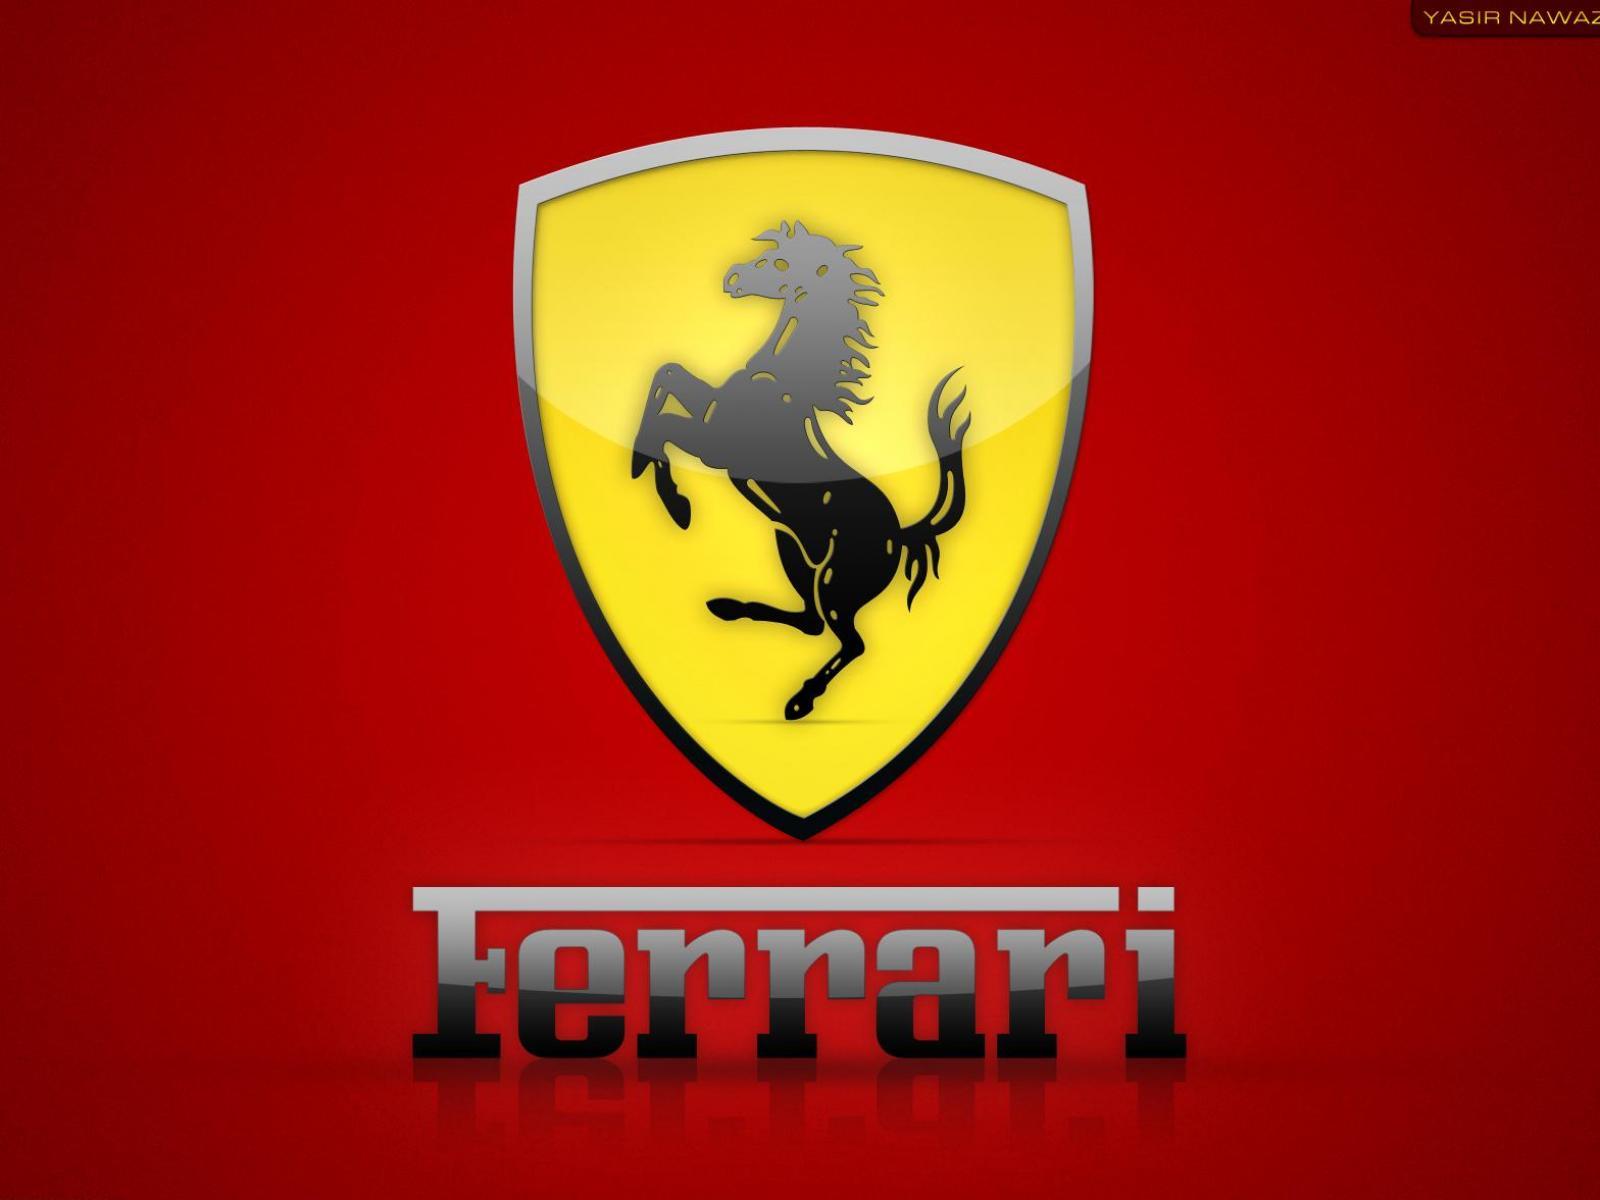 Ferrari Logo 83 44058 Image HD Wallpapers